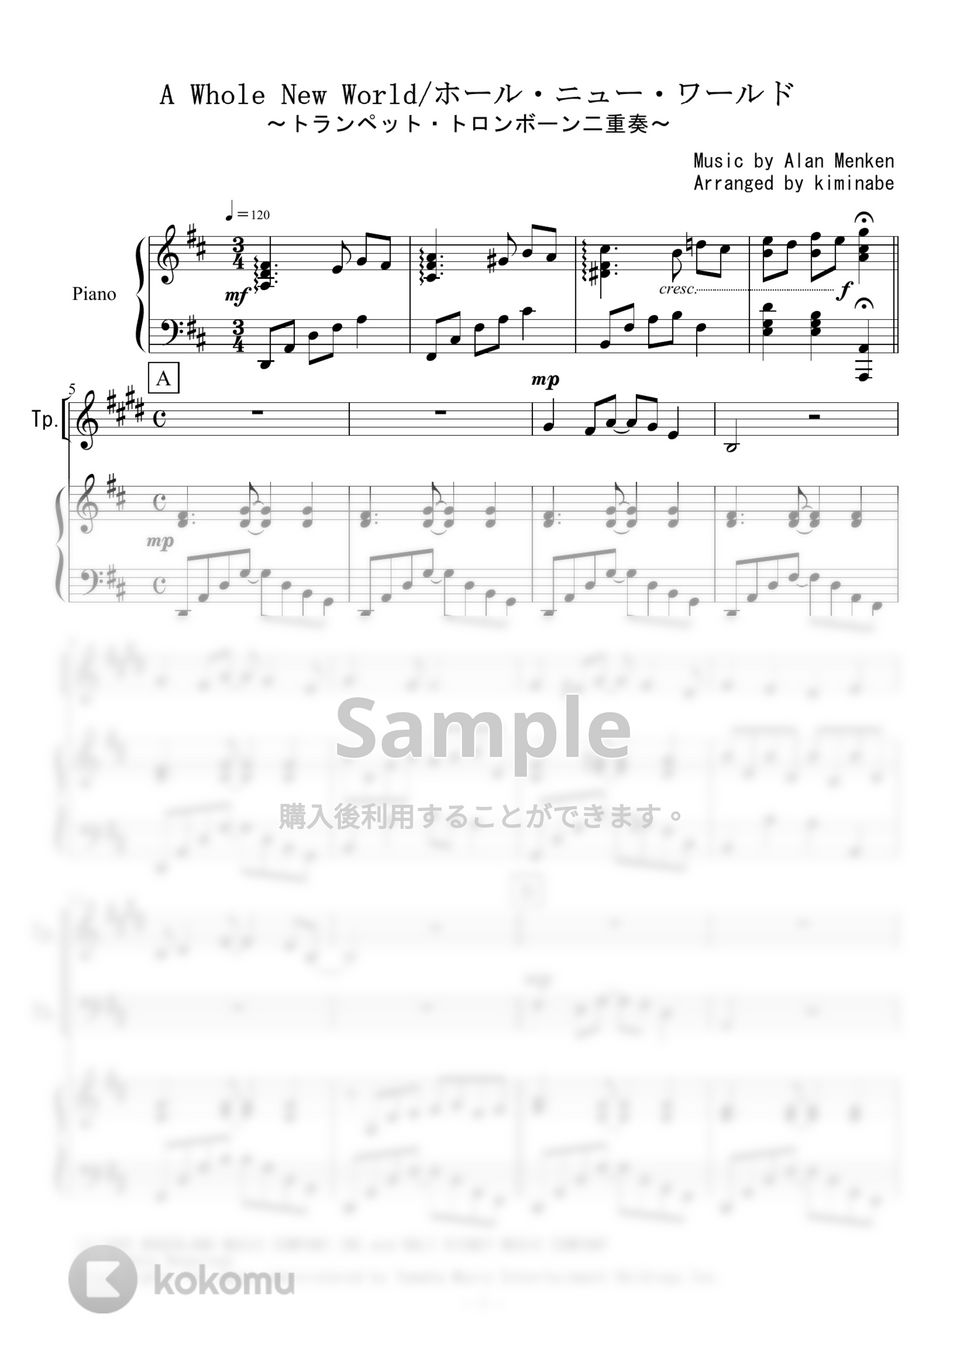 A.メンケン - ホール・ニュー・ワールド／A Whole New World (トランペット・トロンボーン二重奏) by kiminabe